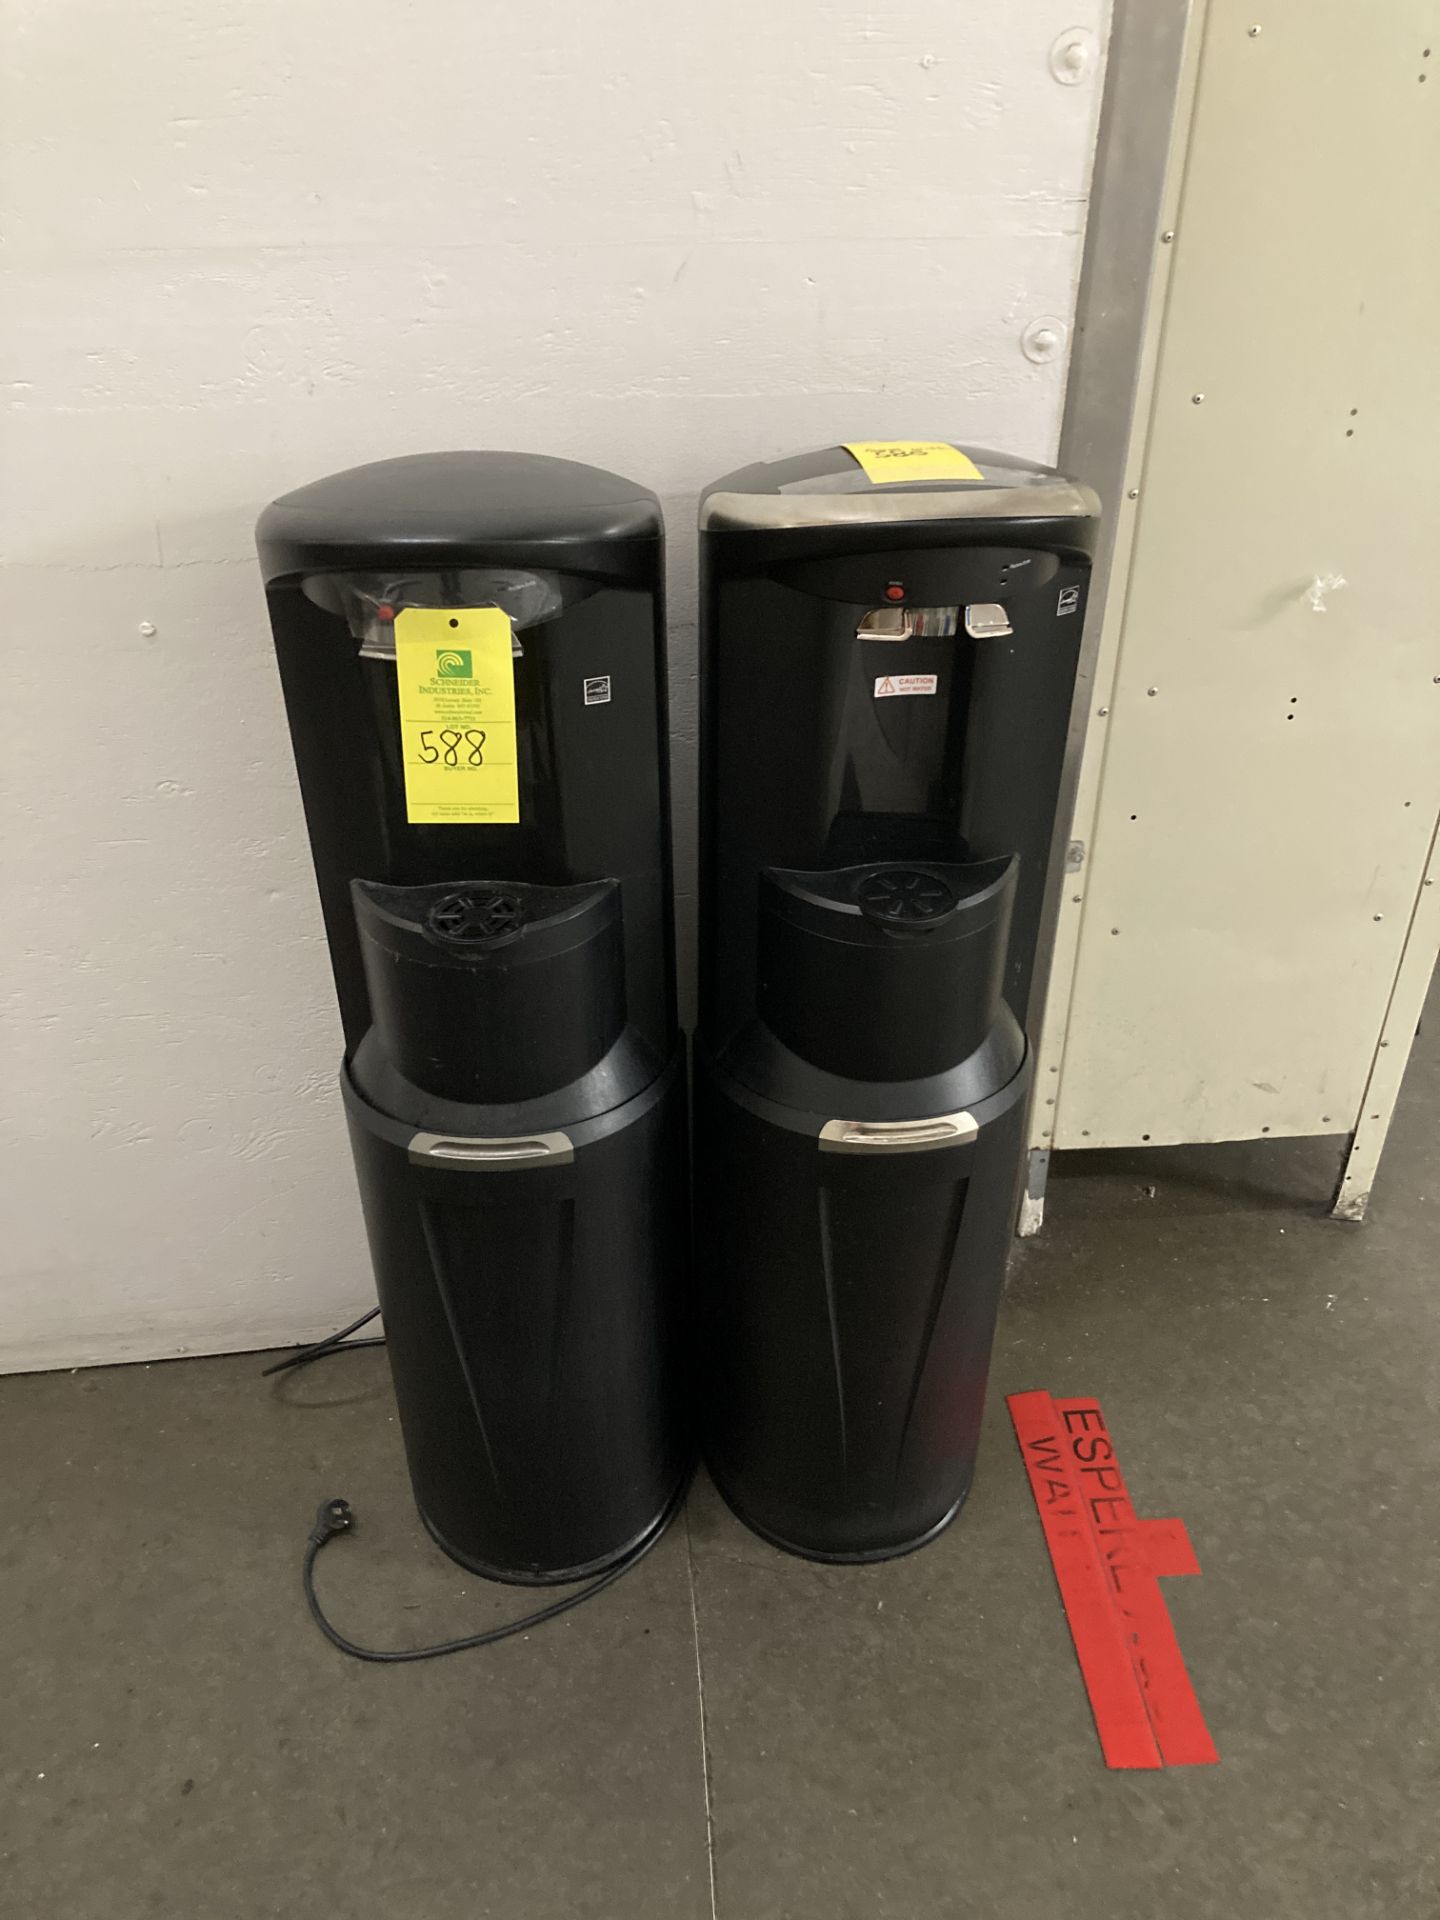 LOT OF 2 Crystal Mountain water dispenser, model STRM2KHK1C, 115 vac Rigging Fee: $50